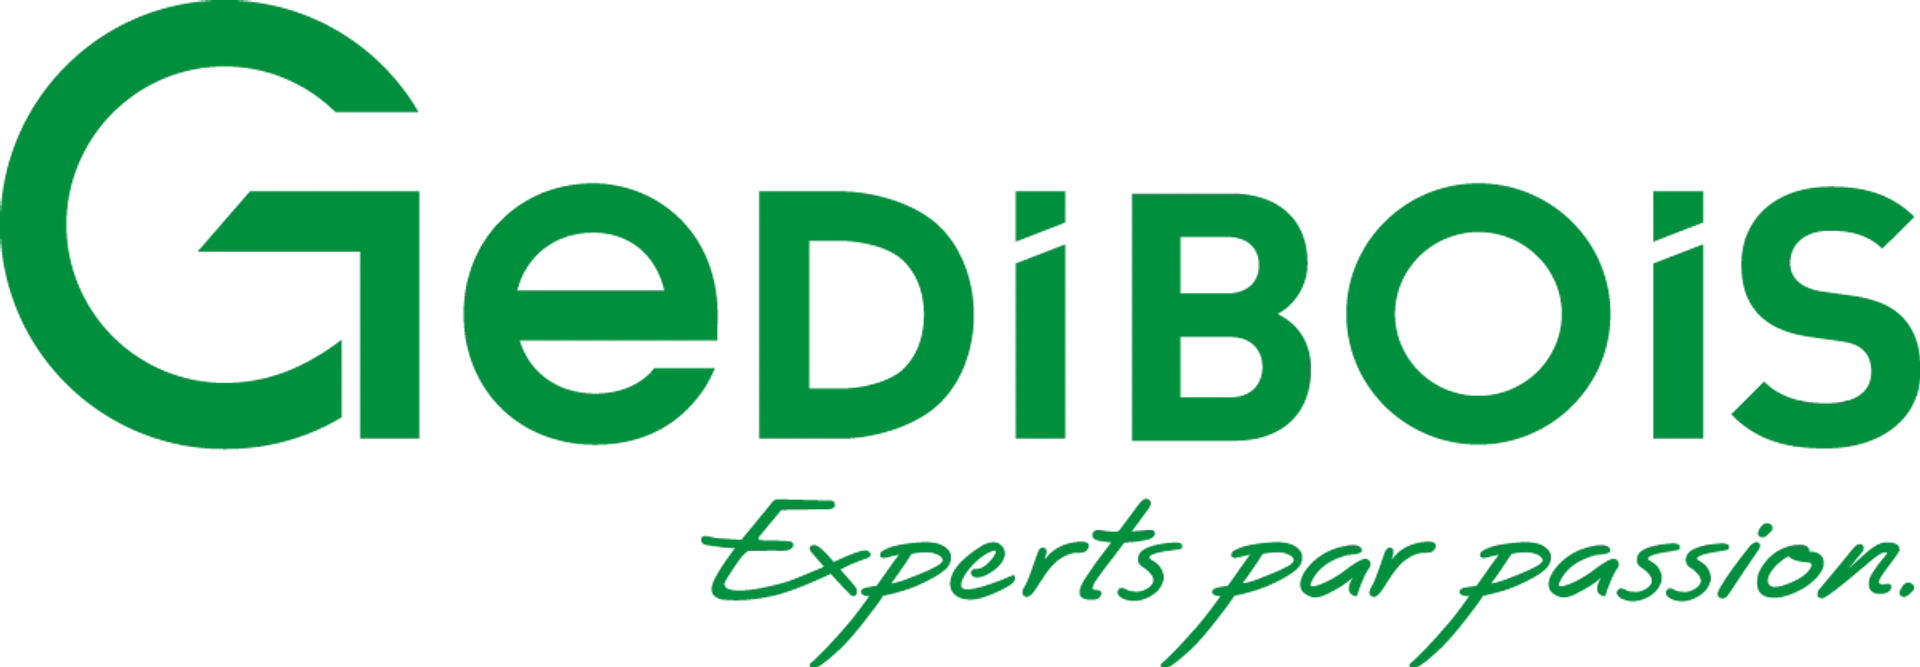 GEDIBOIS logo